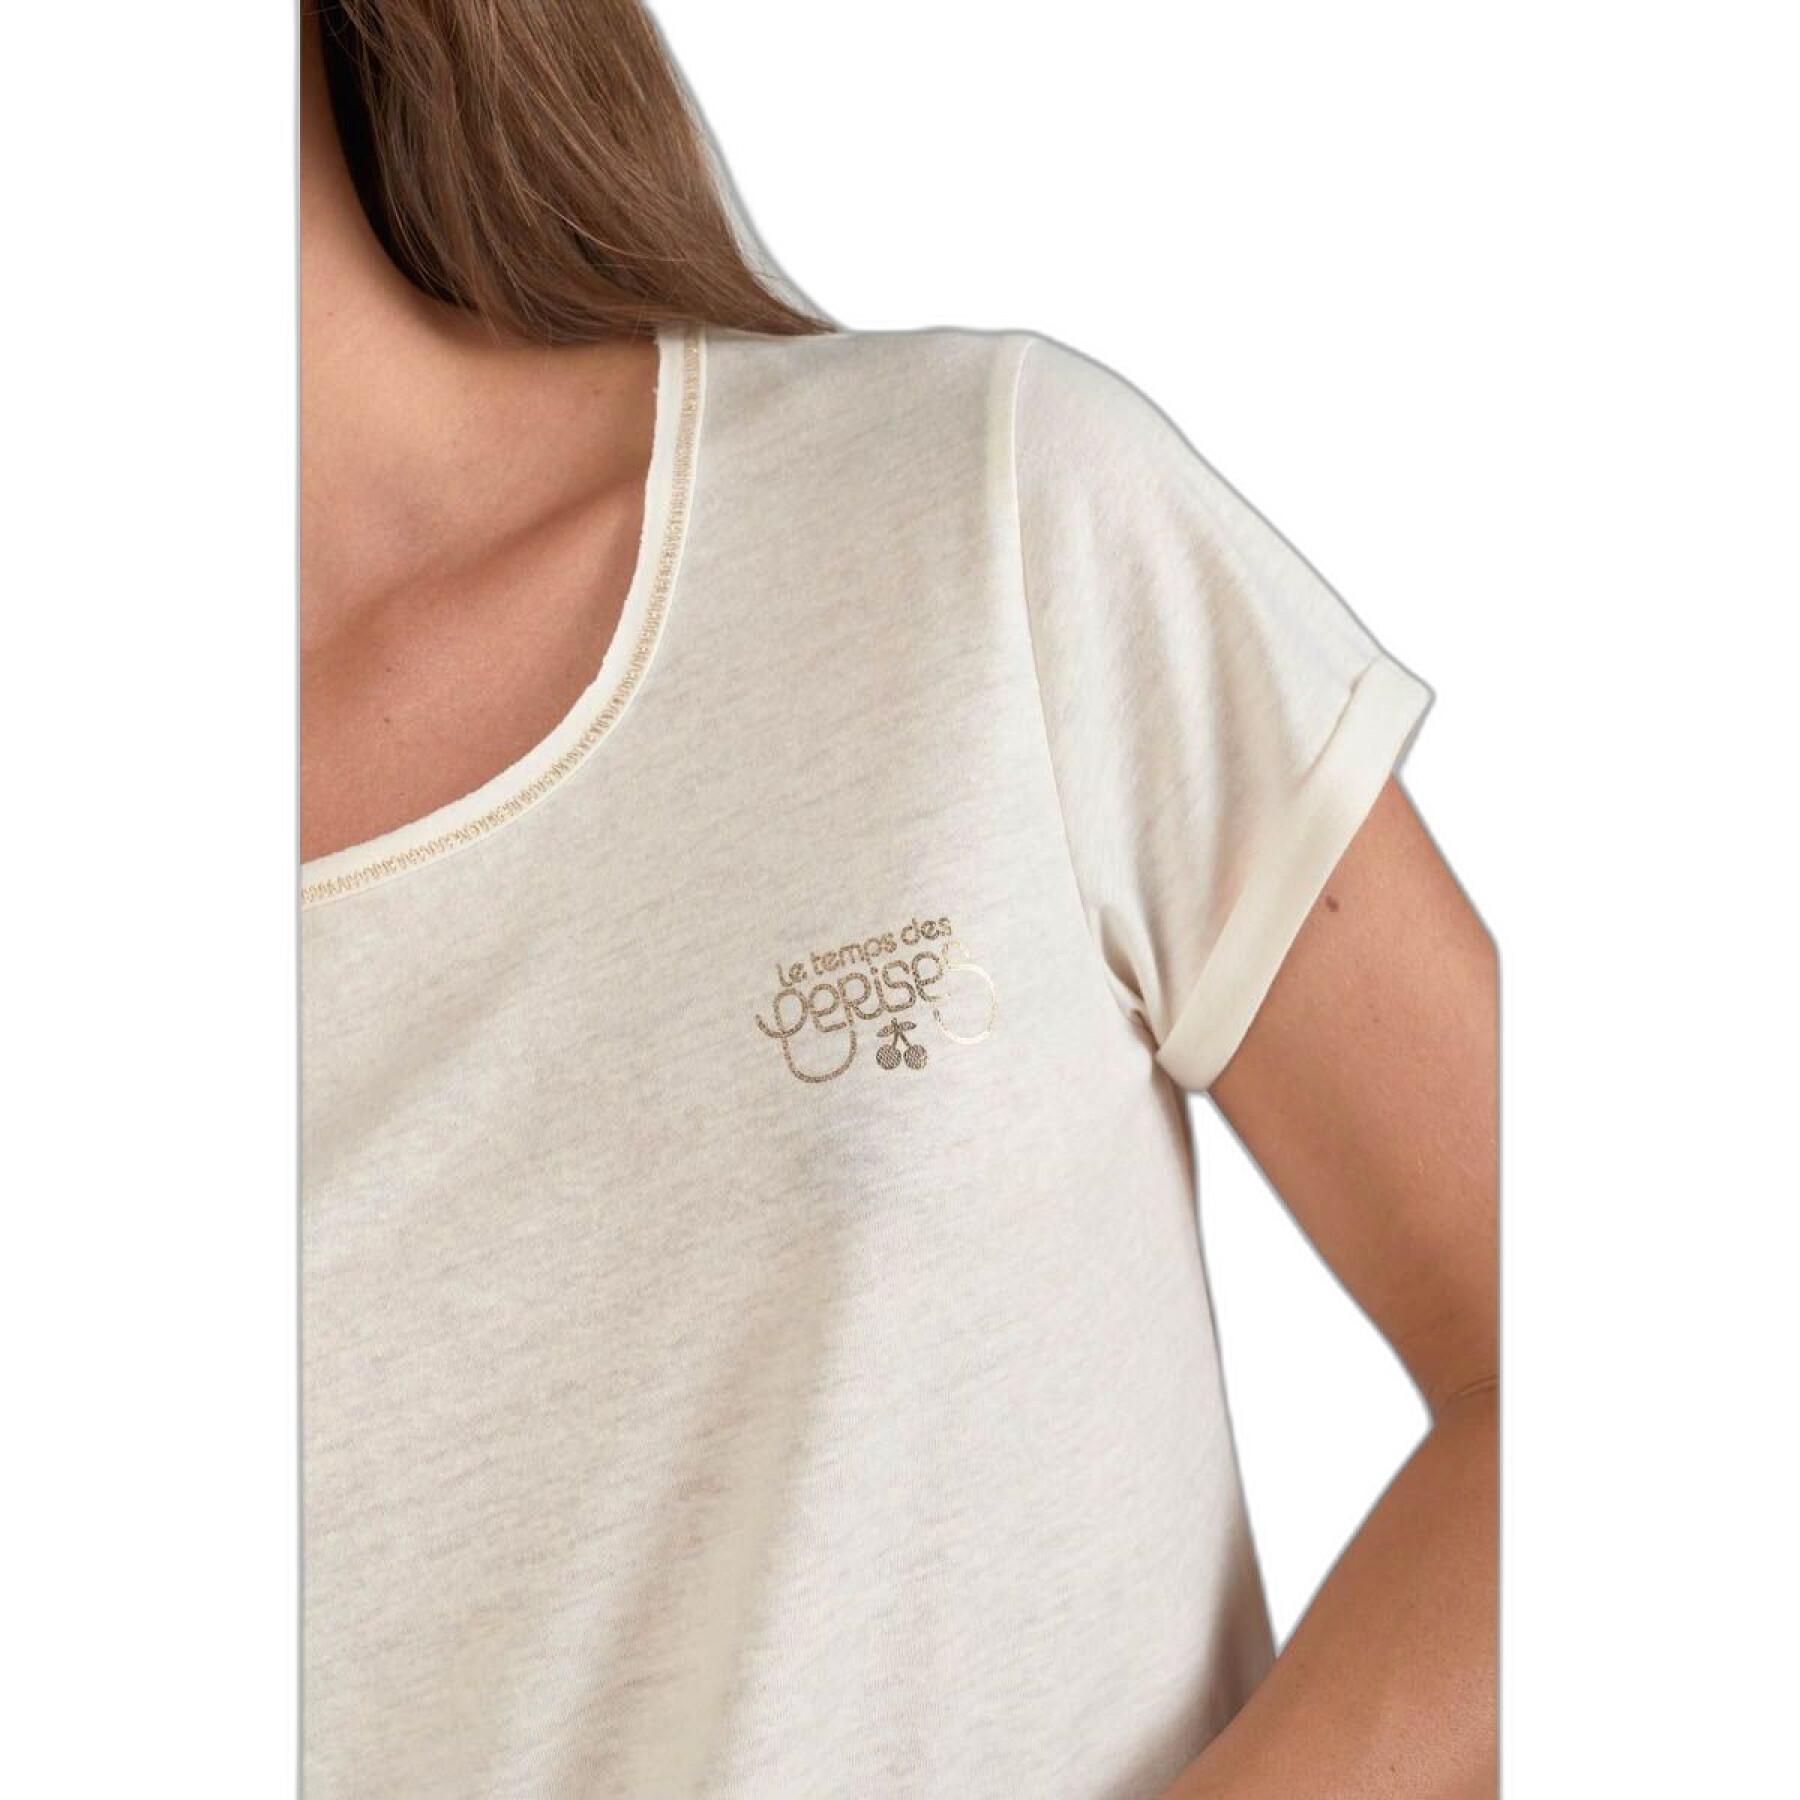 Women's T-shirt Le Temps des cerises Smallvtrame - T-shirts and tank tops -  Woman - Lifestyle